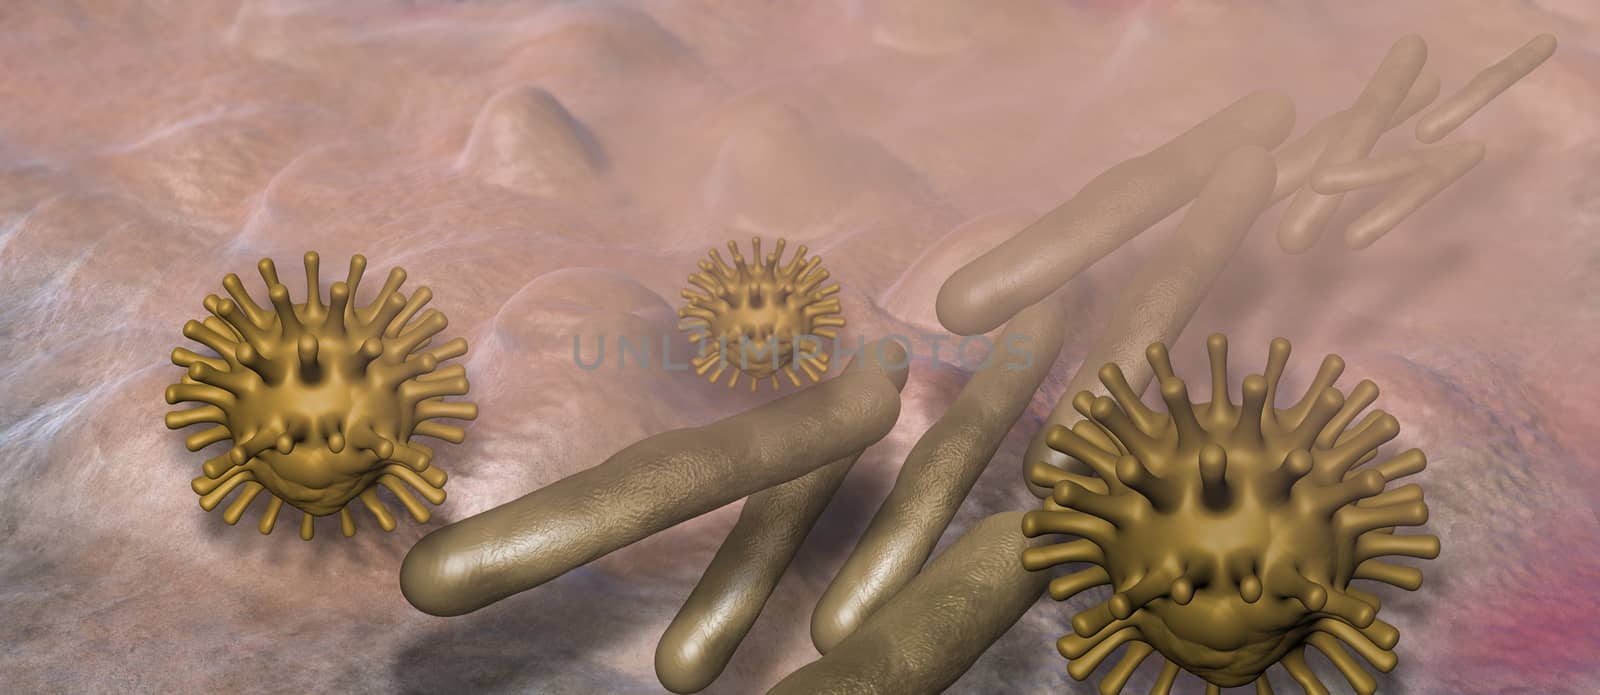 Virus and bacterium by vitanovski